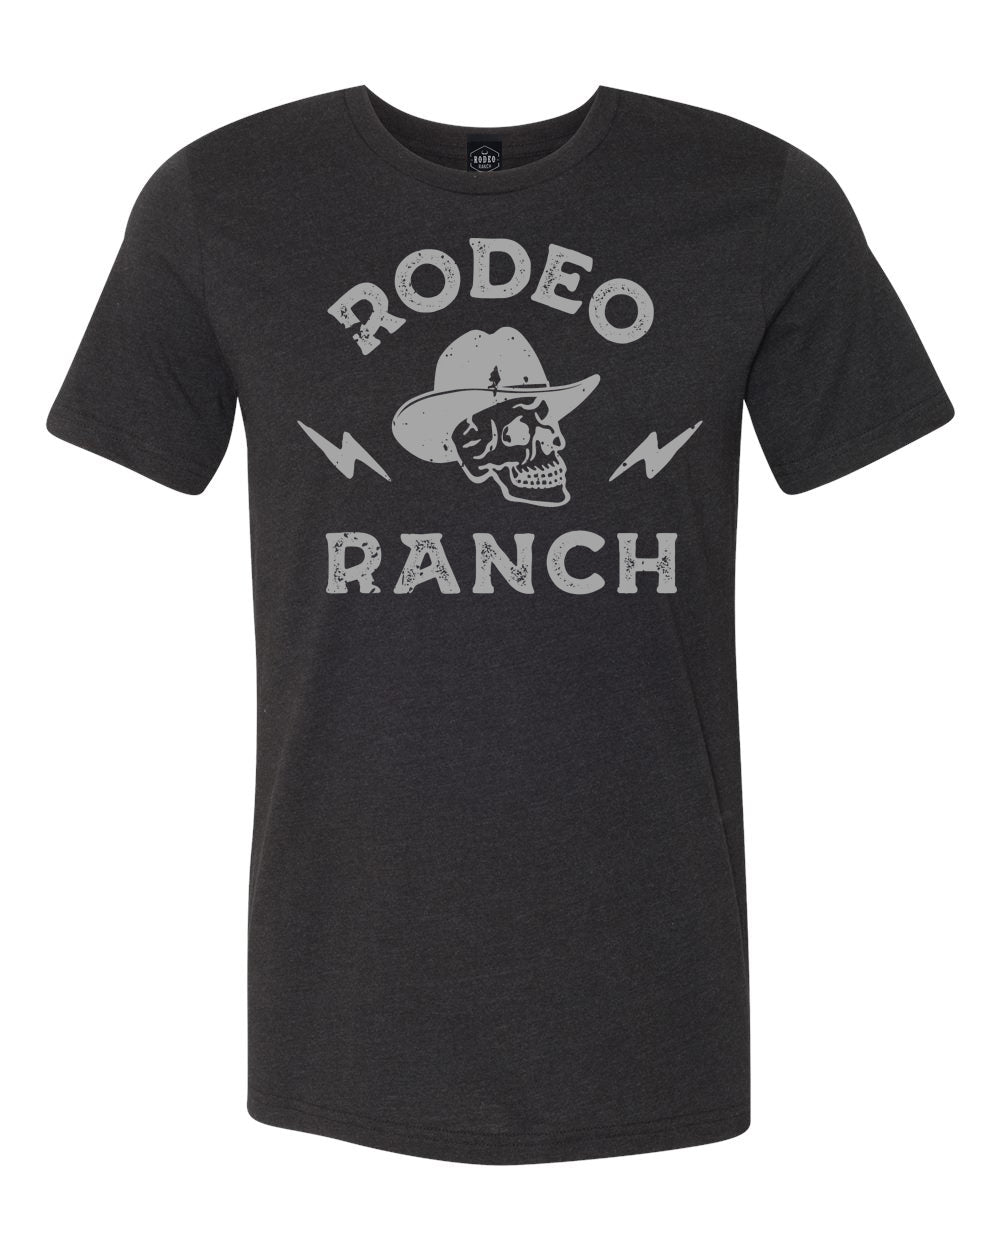 Rodeo Ranch Skull Short Sleeve Shirt - Heather Graphite